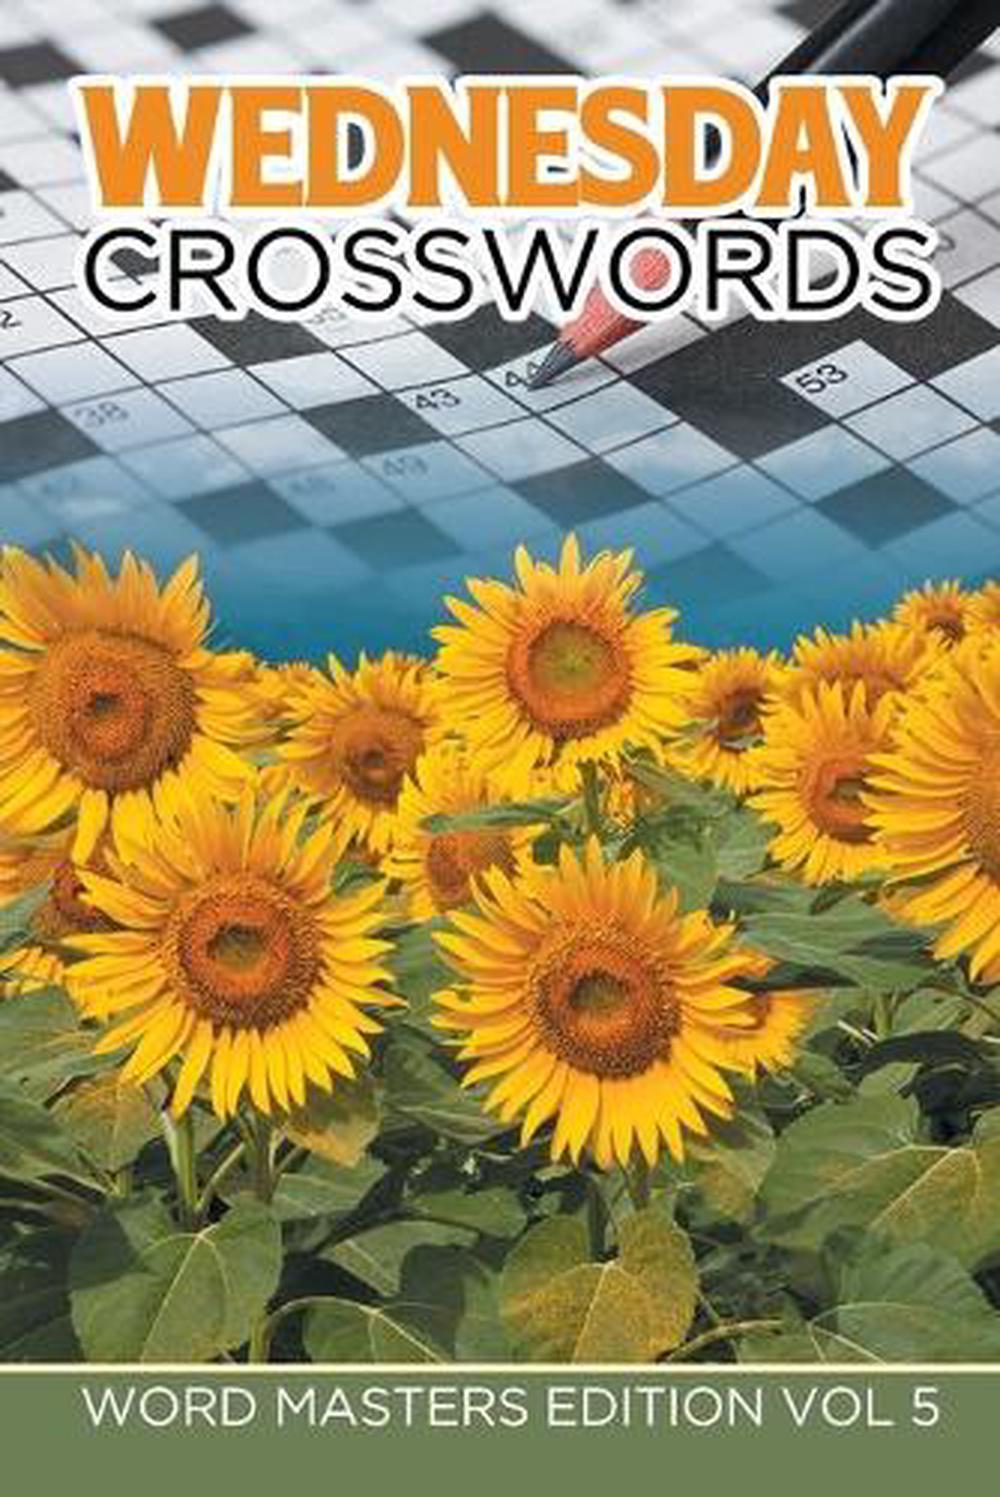 nyt crosswords wednesday